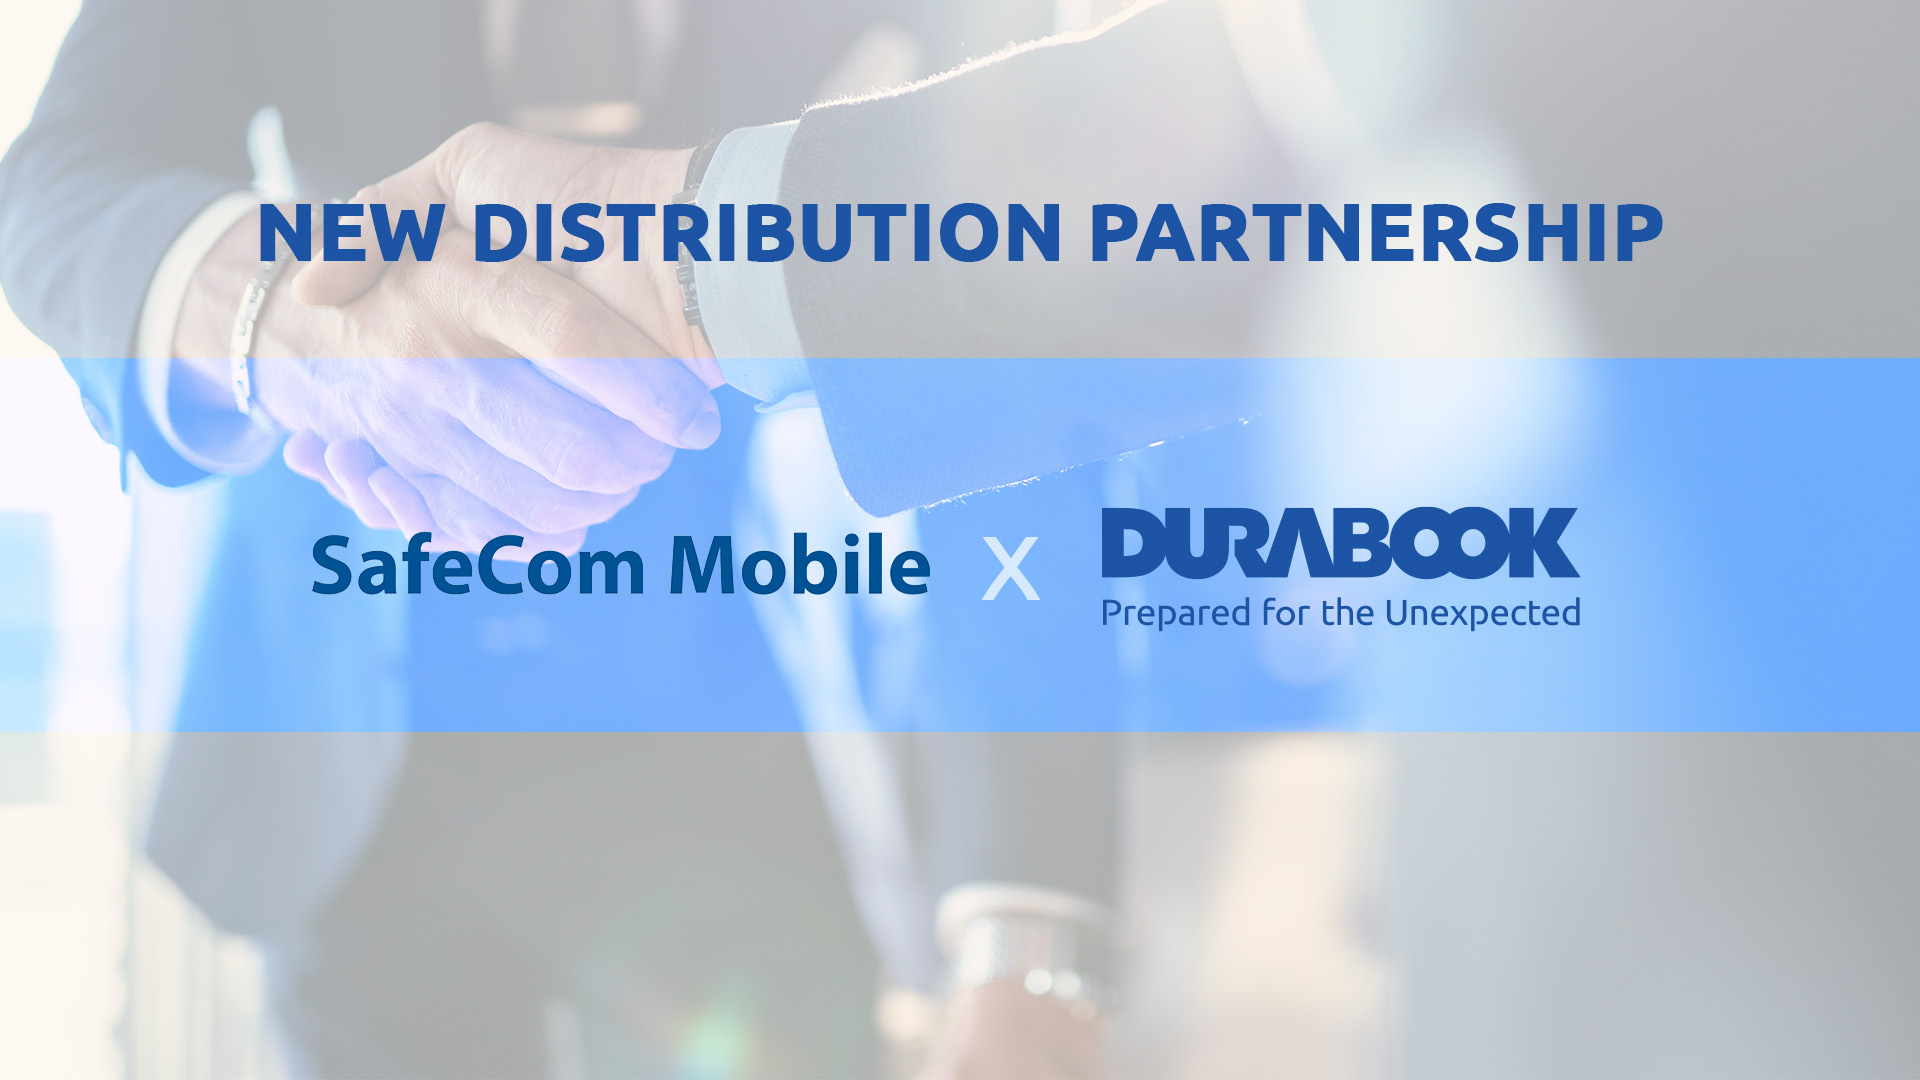 Distribution Partnership - Safecom Mobile With Durabook